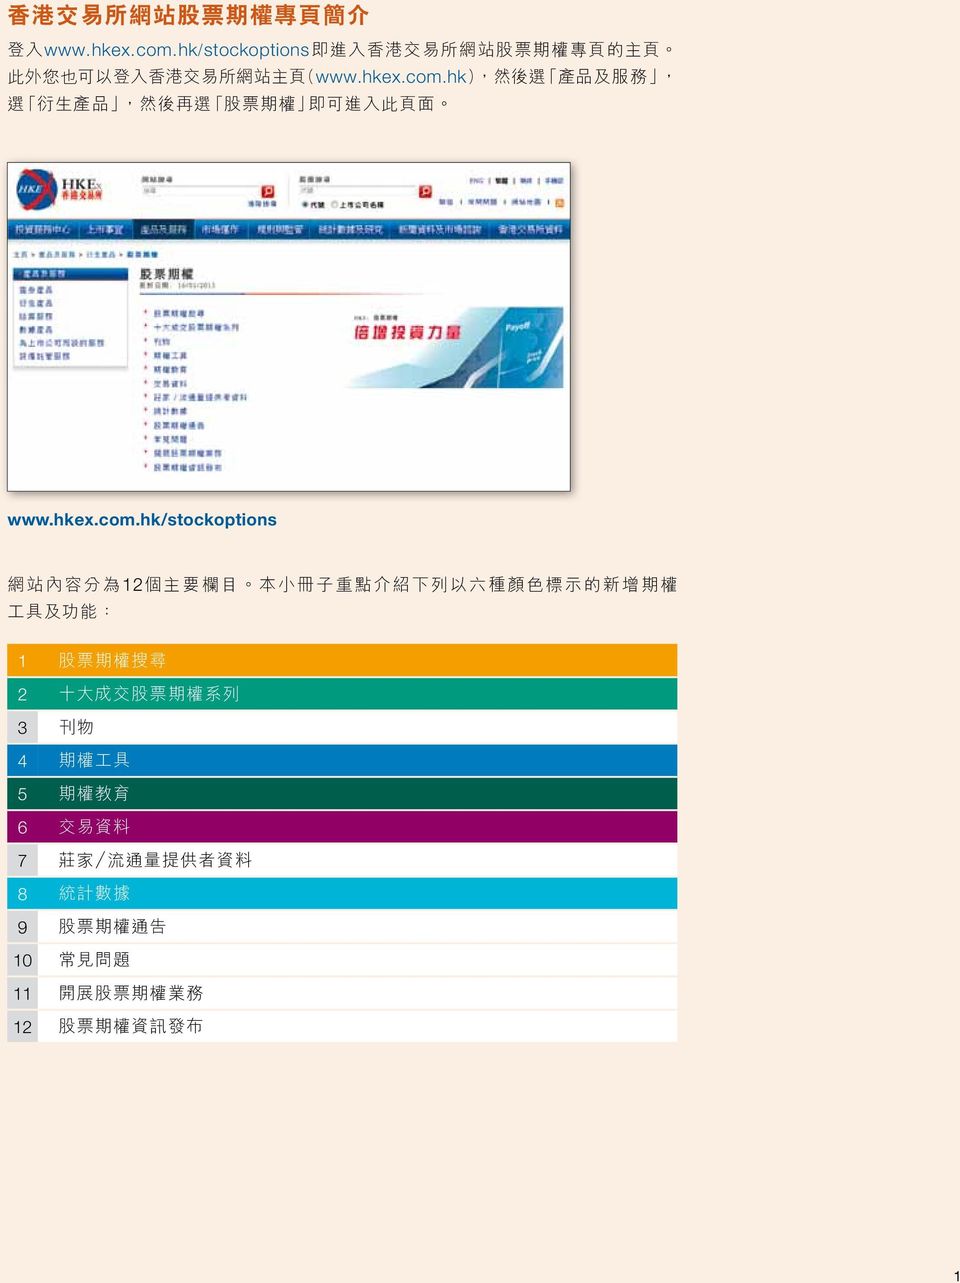 hk), 然 後 選 產 品 及 服 務, 選 衍 生 產 品, 然 後 再 選 即 可 進 入 此 頁 面 www.hkex.com.